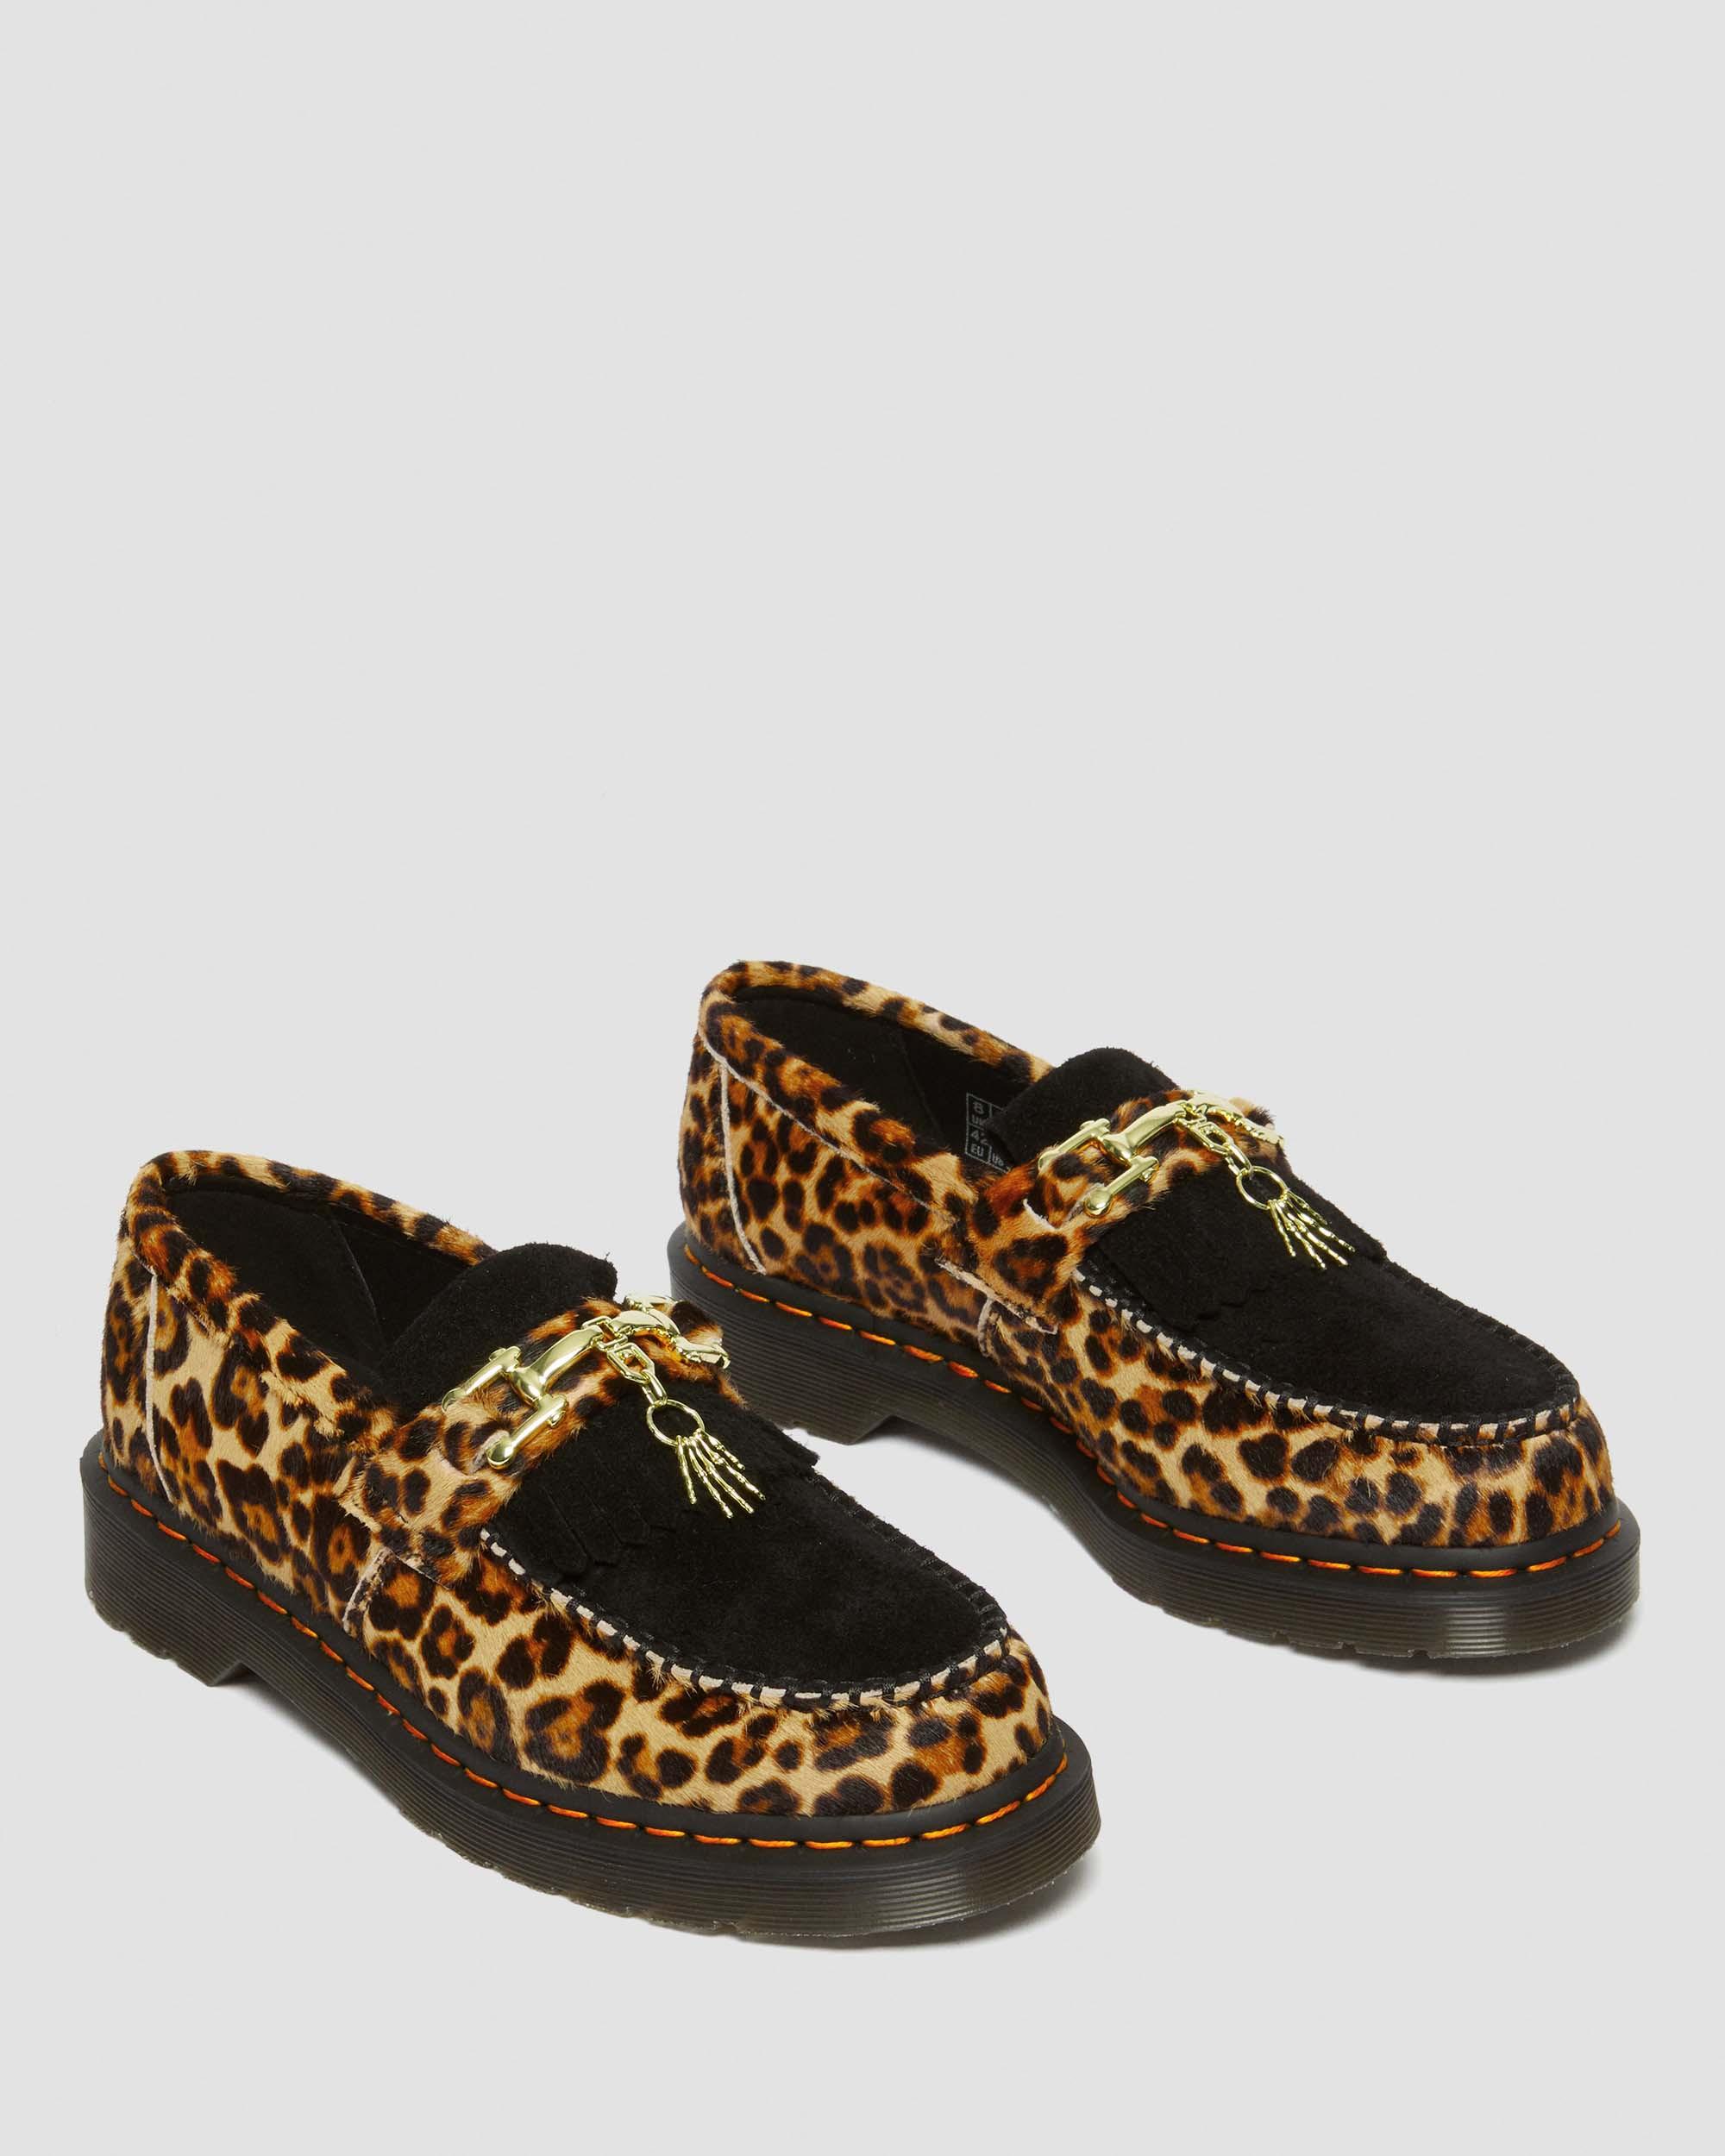 Adrian Hair-On Leopard Snaffle Loafers in Archive Leopard + Black